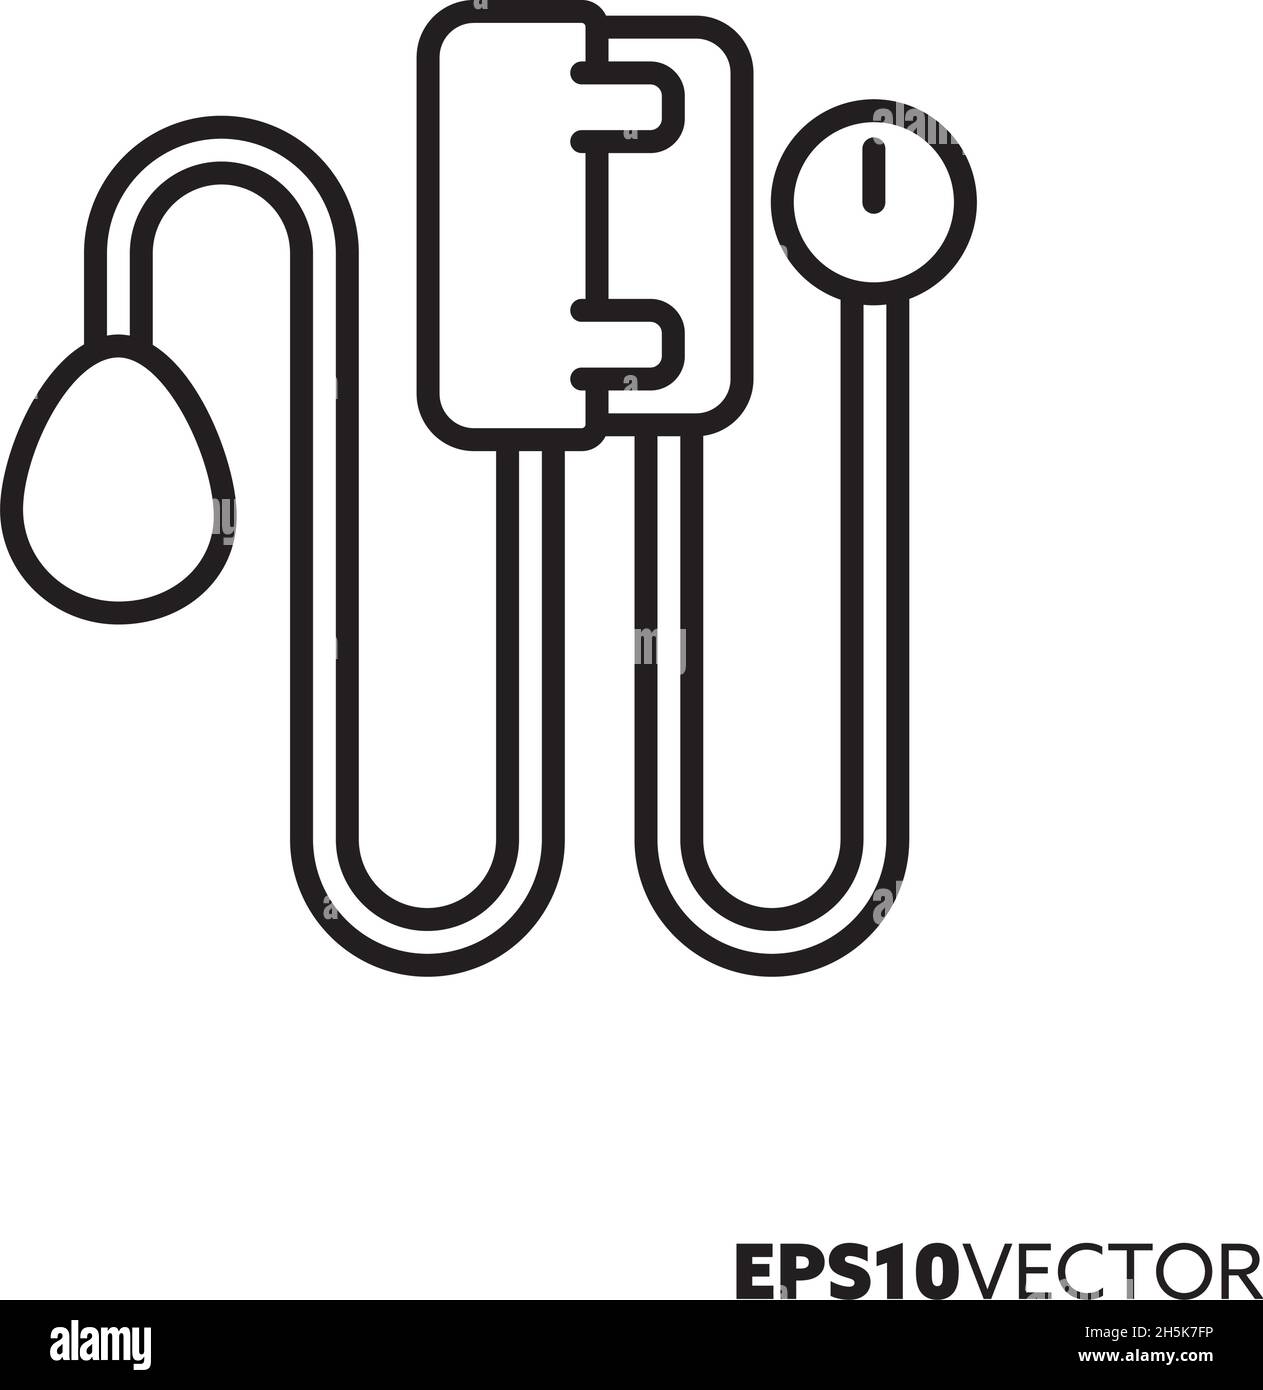 Blood pressure gauge line icon. Outline symbol of medical equipment. Health care and medicine concept flat vector illustration. Stock Vector